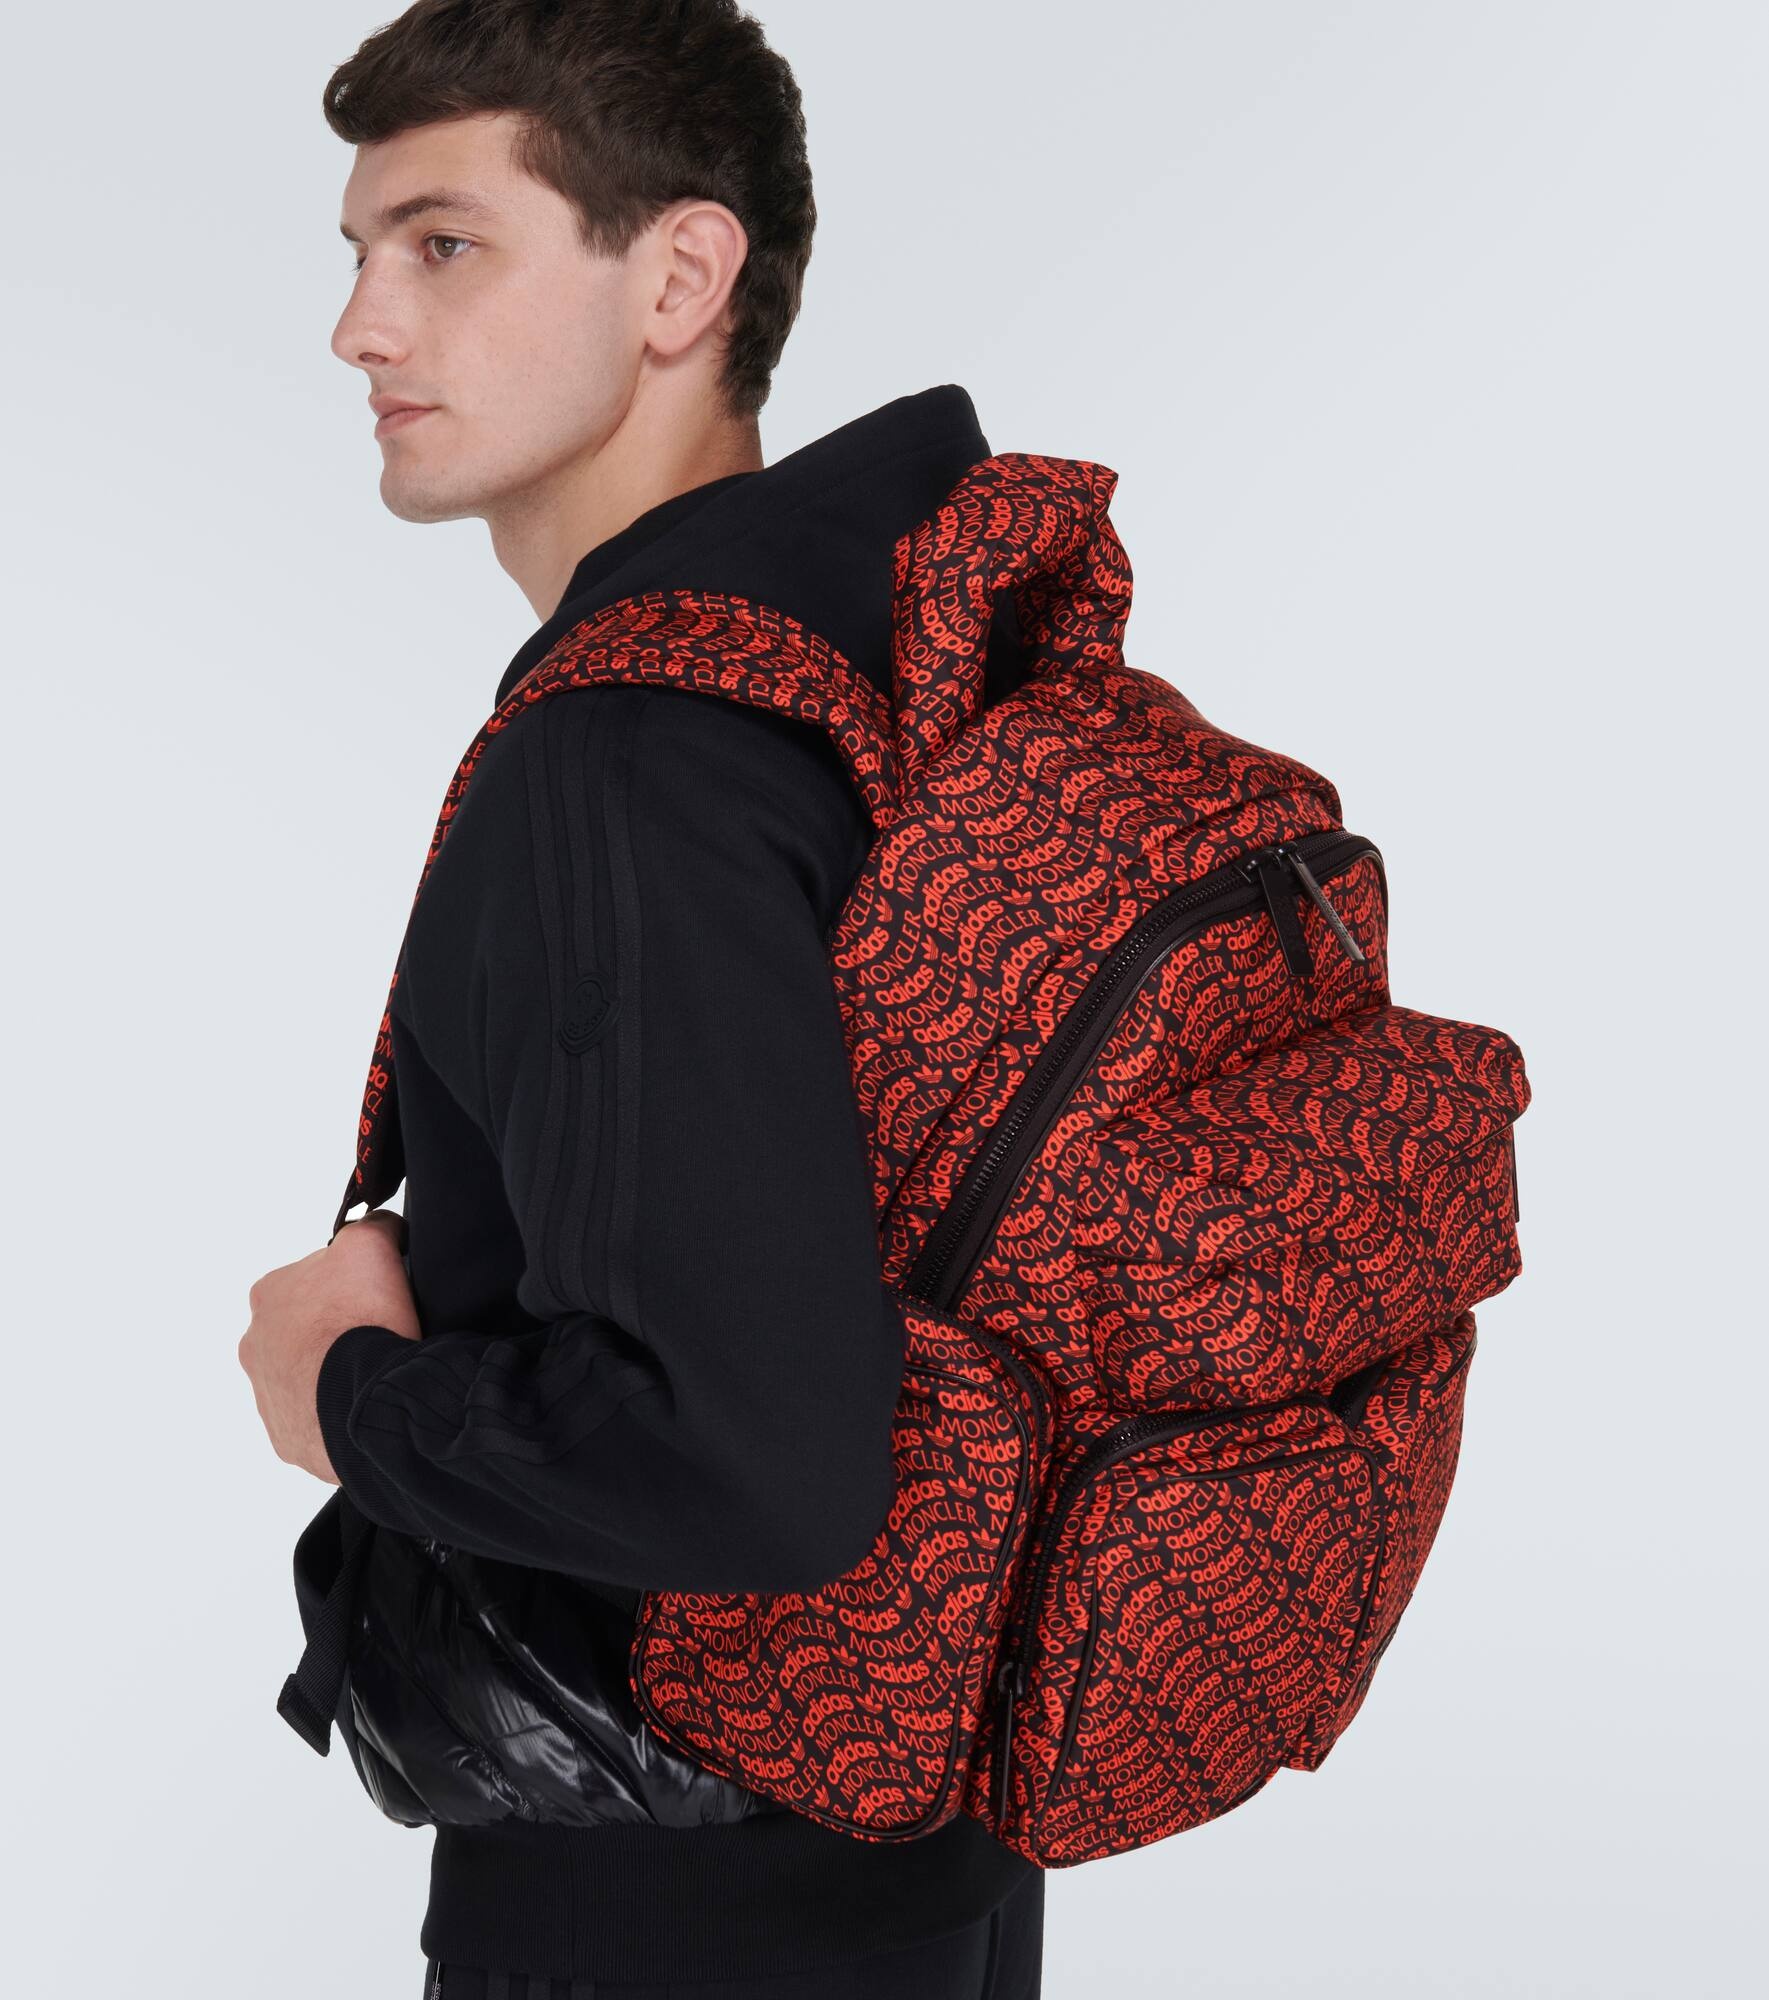 x Adidas printed backpack - 2